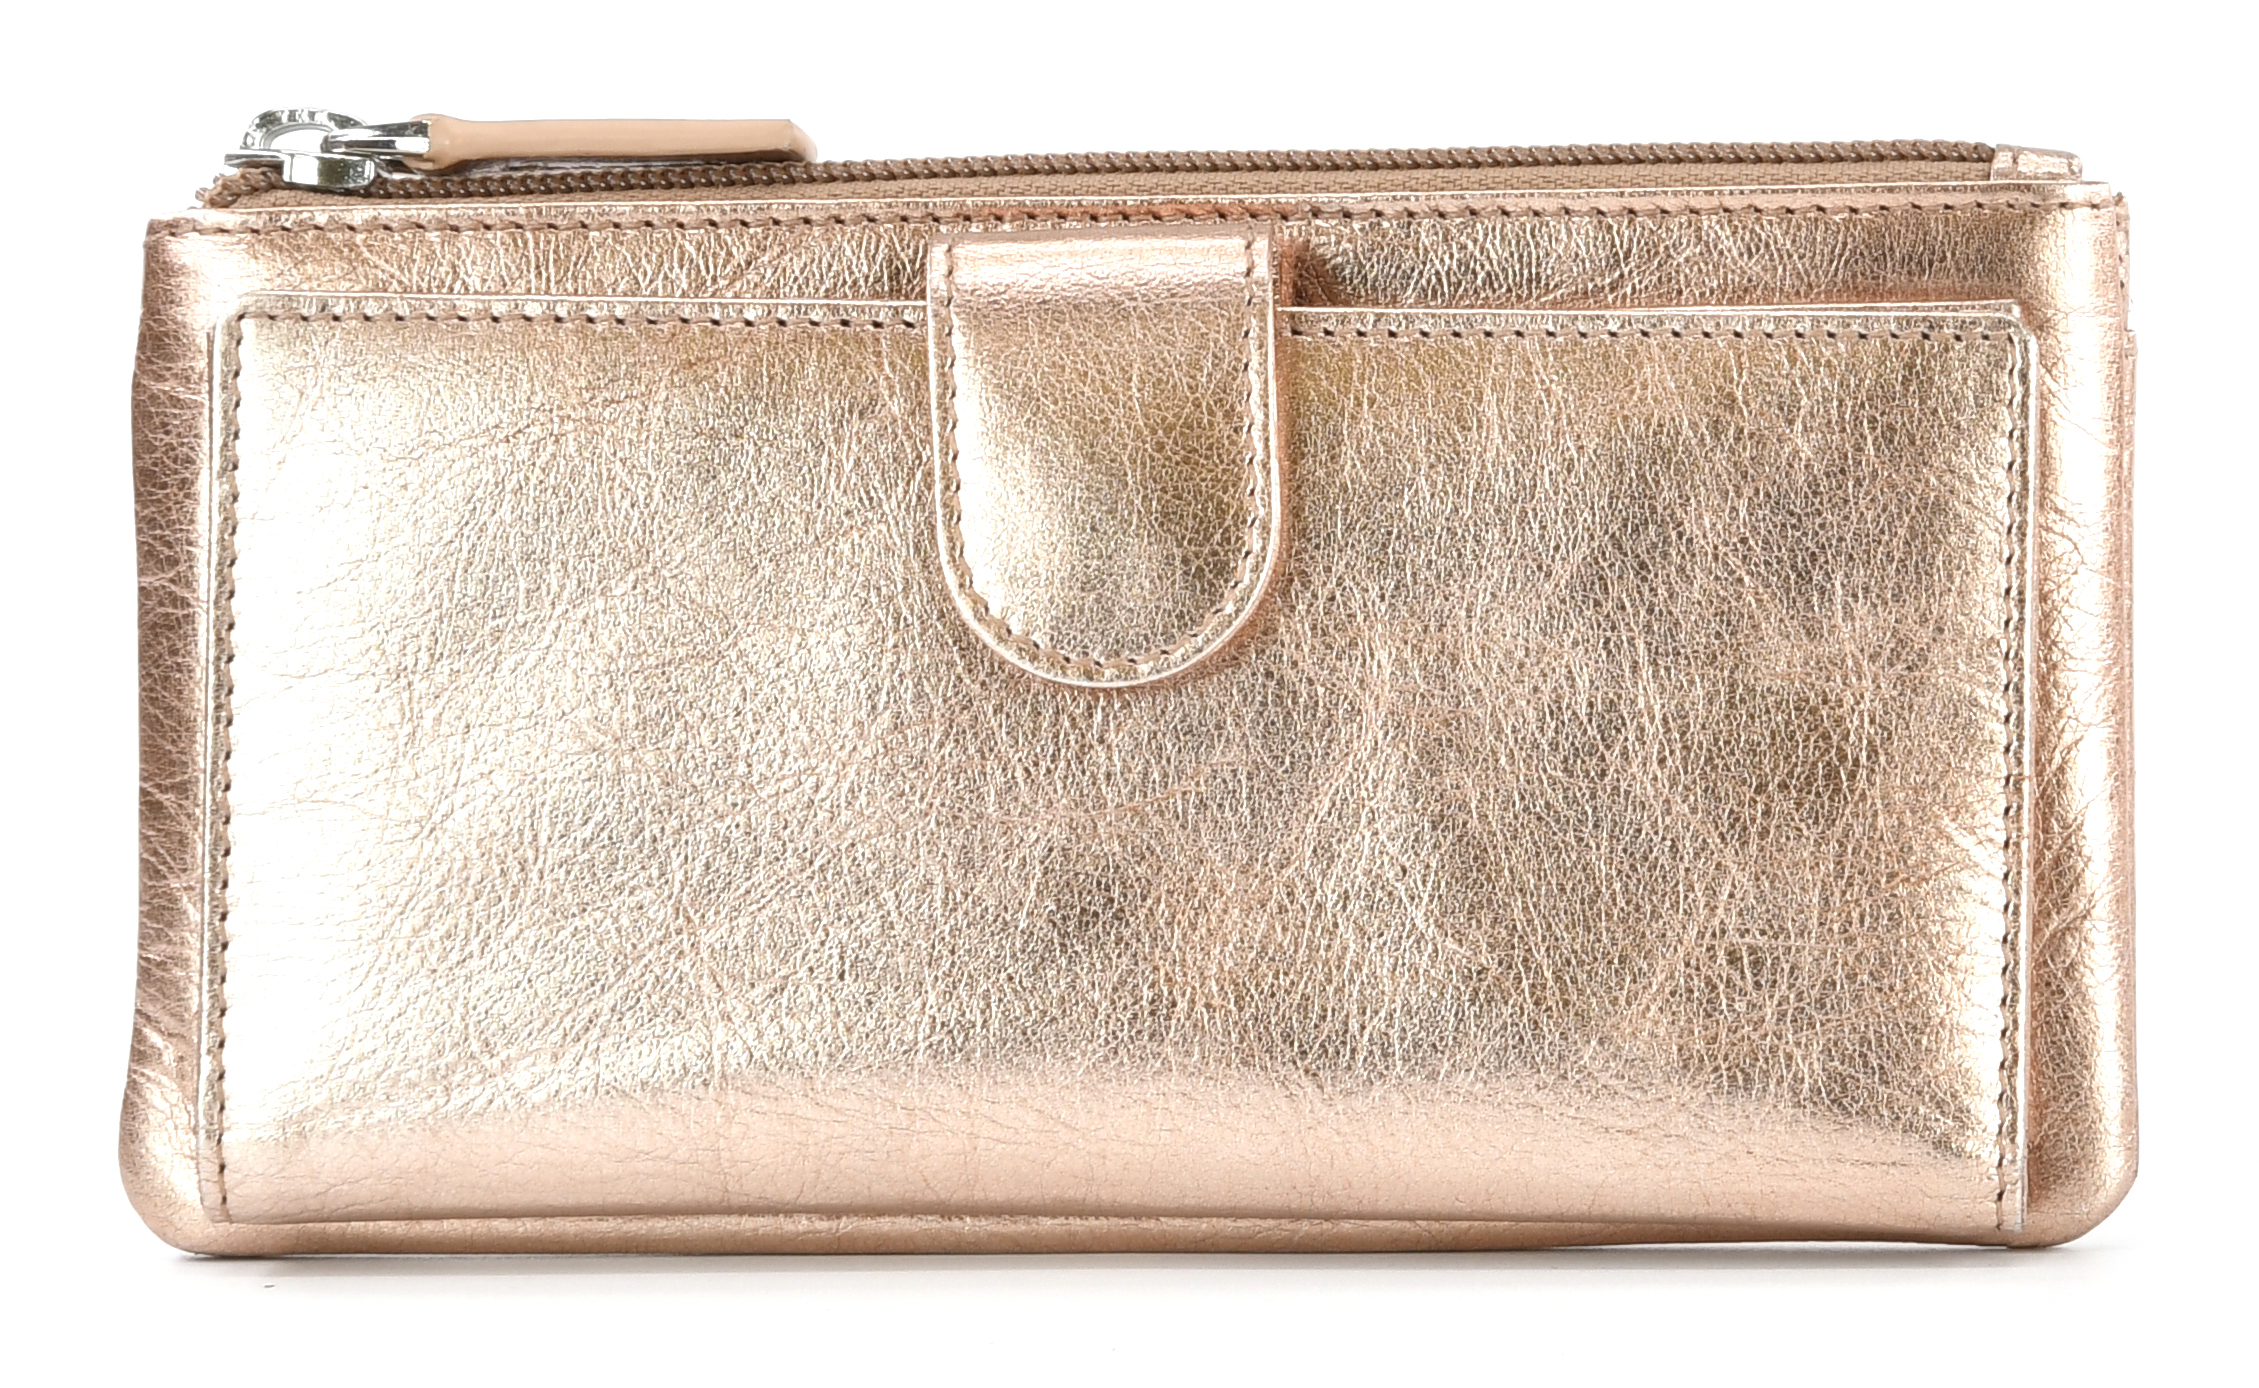 Ladies Small Compact Tab Leather Purse/Wallet by Golunski Graffiti Gift Box  | eBay